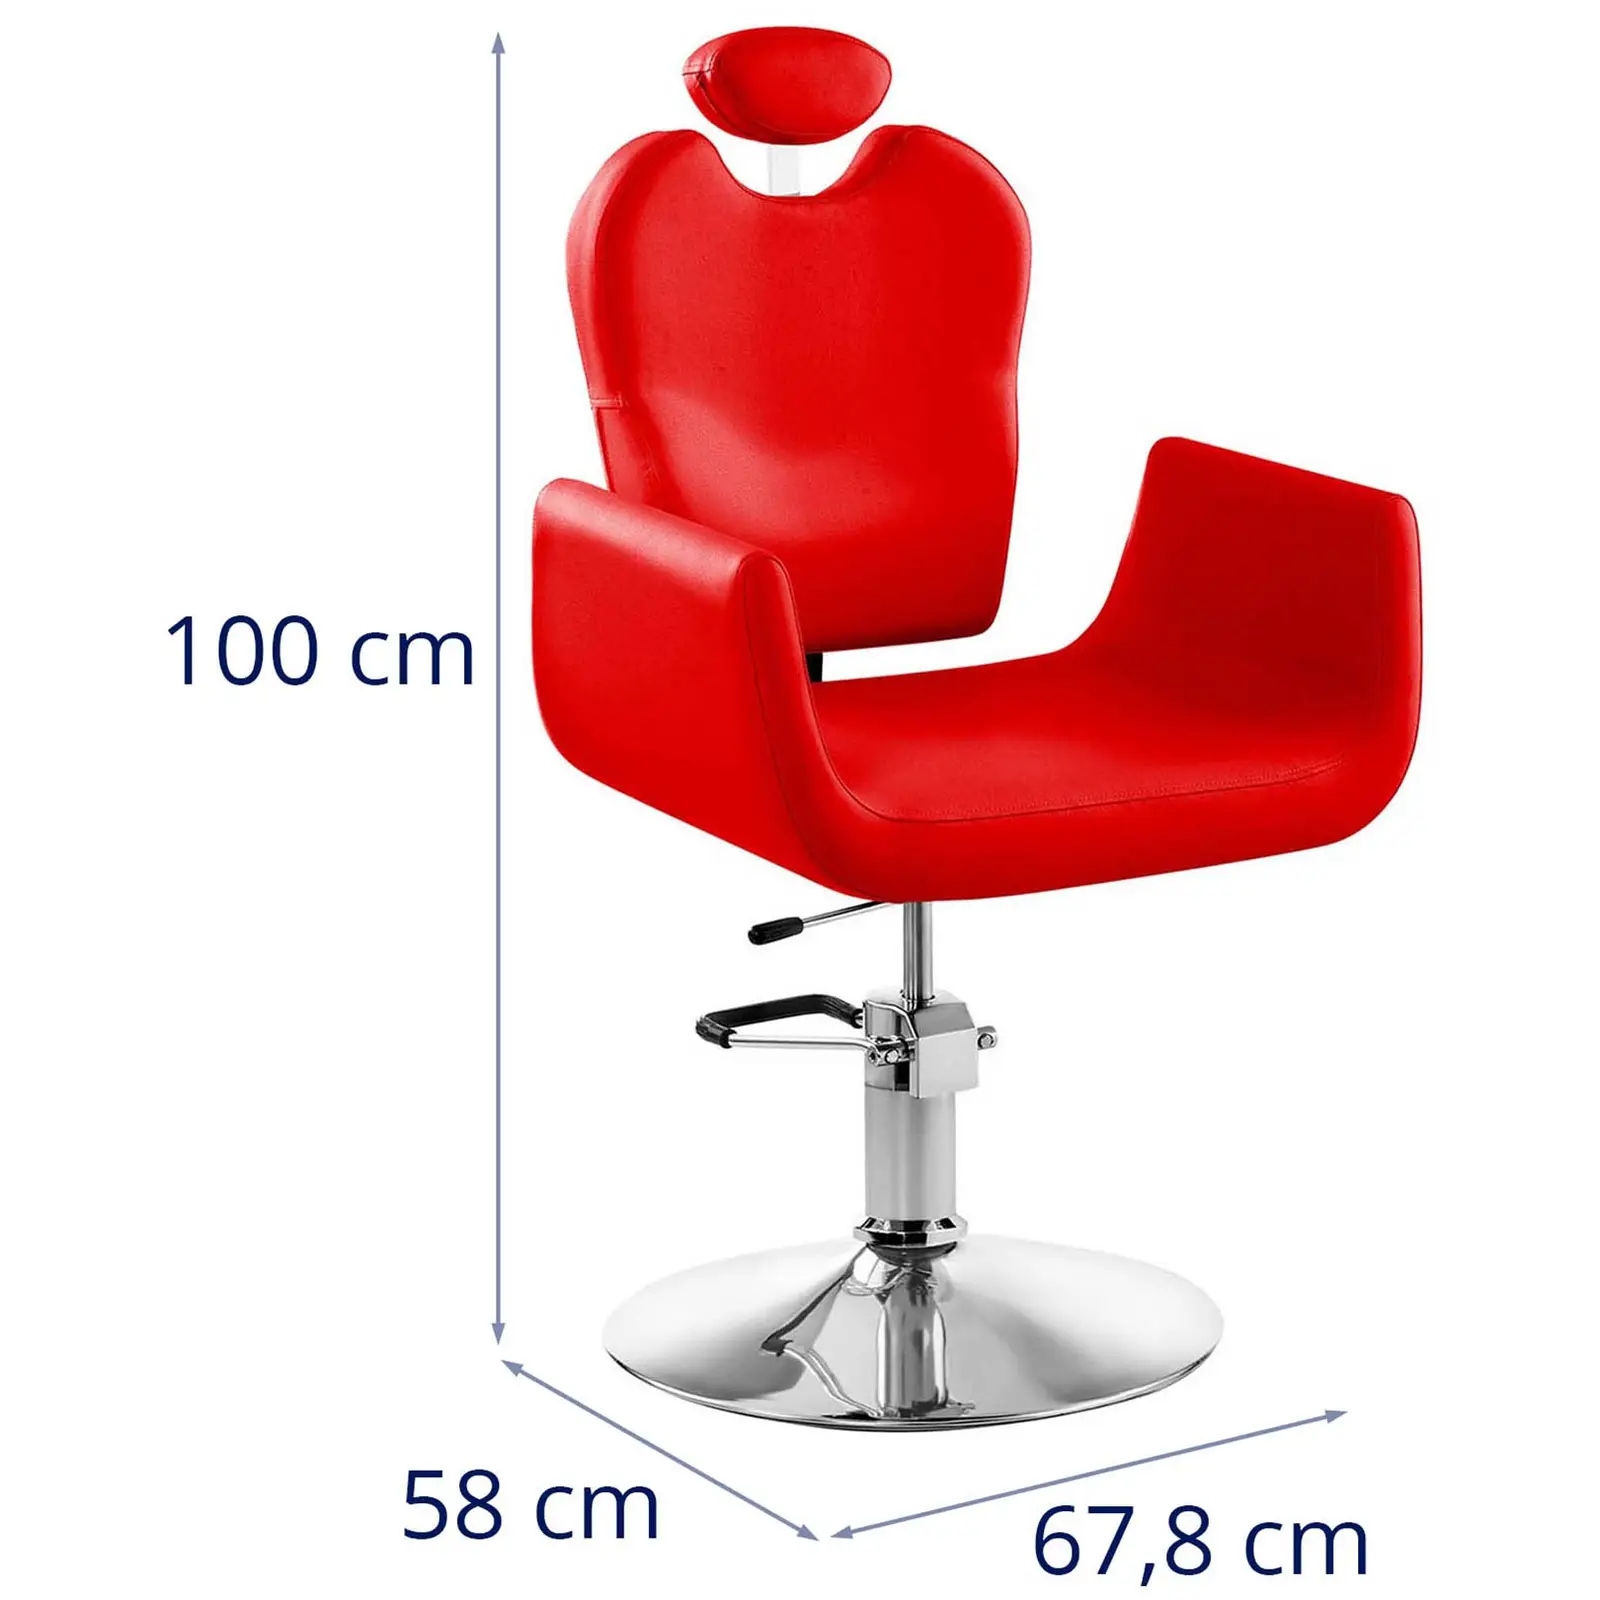 Fodrász szék Livorno piros